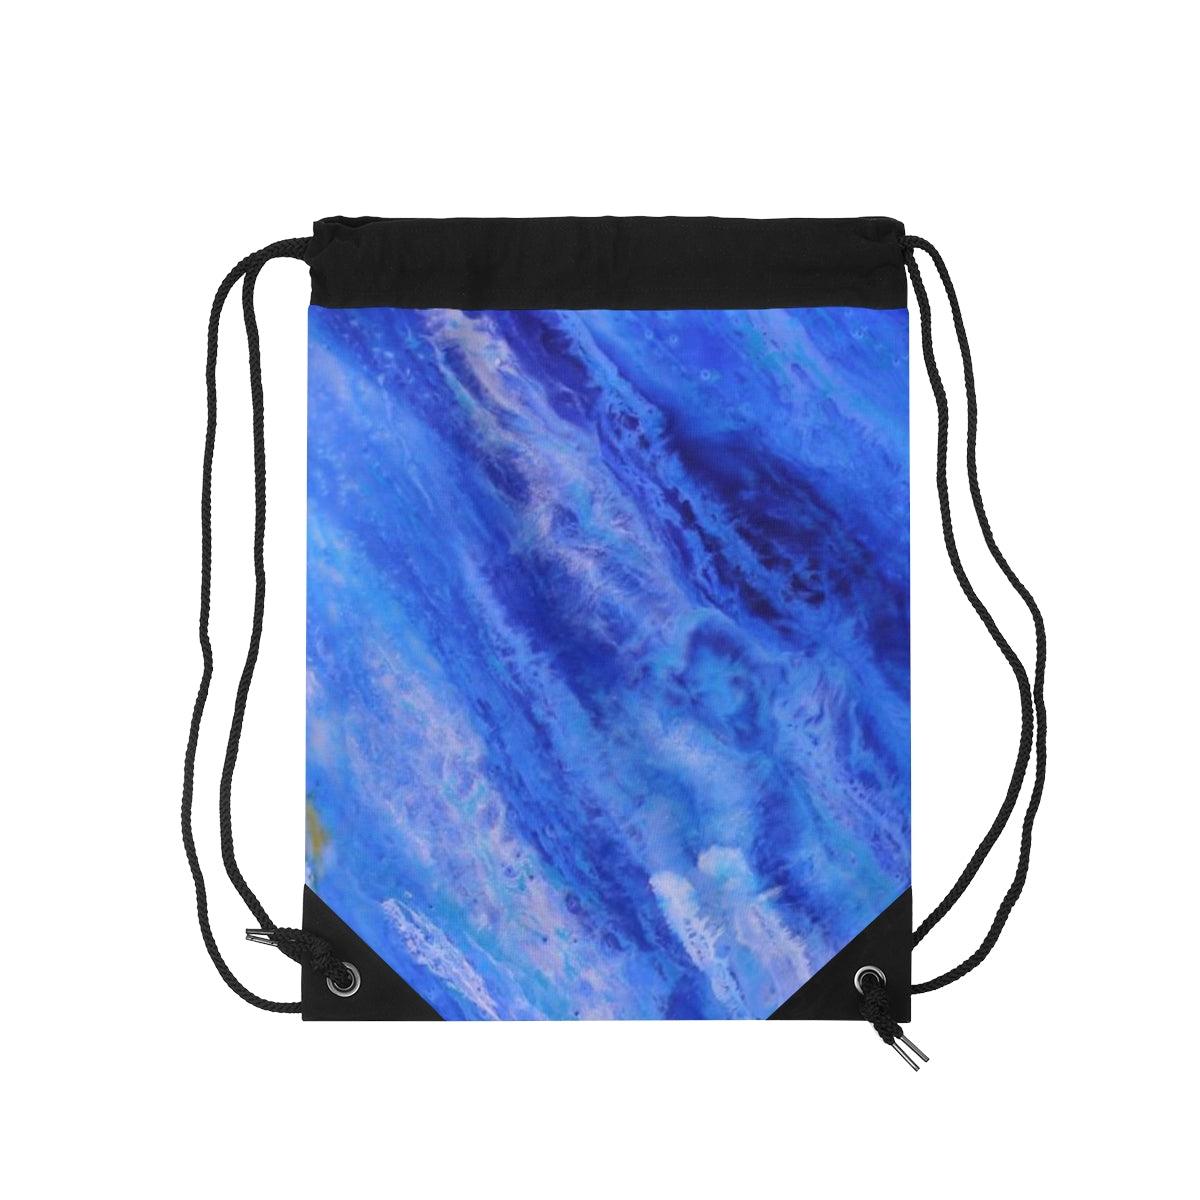 "Seascape" Drawstring Bag-Bags - Mike Giannella - Encaustic Painting - Mixed Media Artist - Art Prints